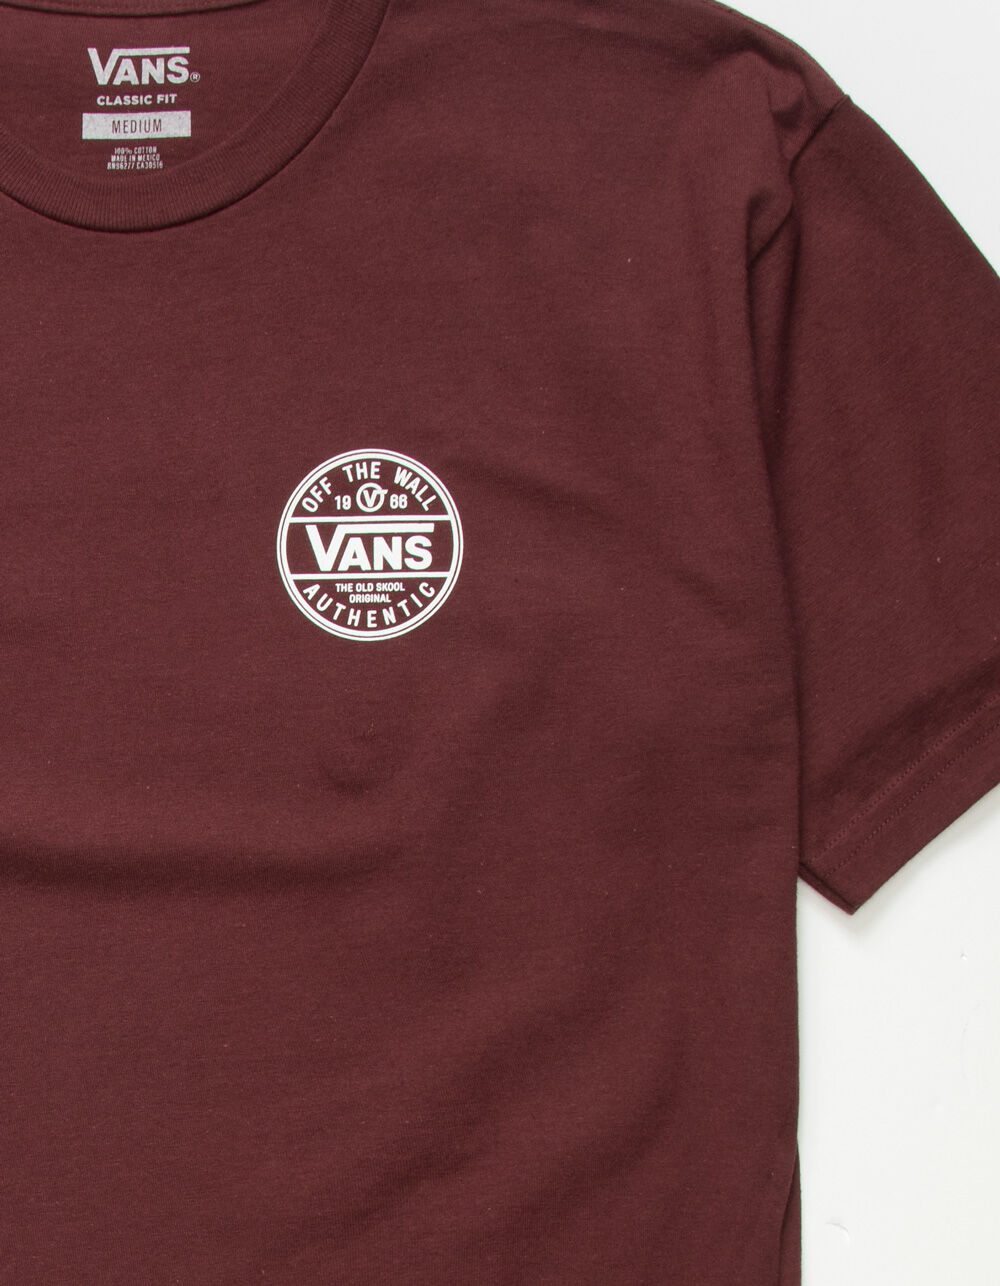 VANS Old Skool Original Mens T-shirt - BURGUNDY | Tillys